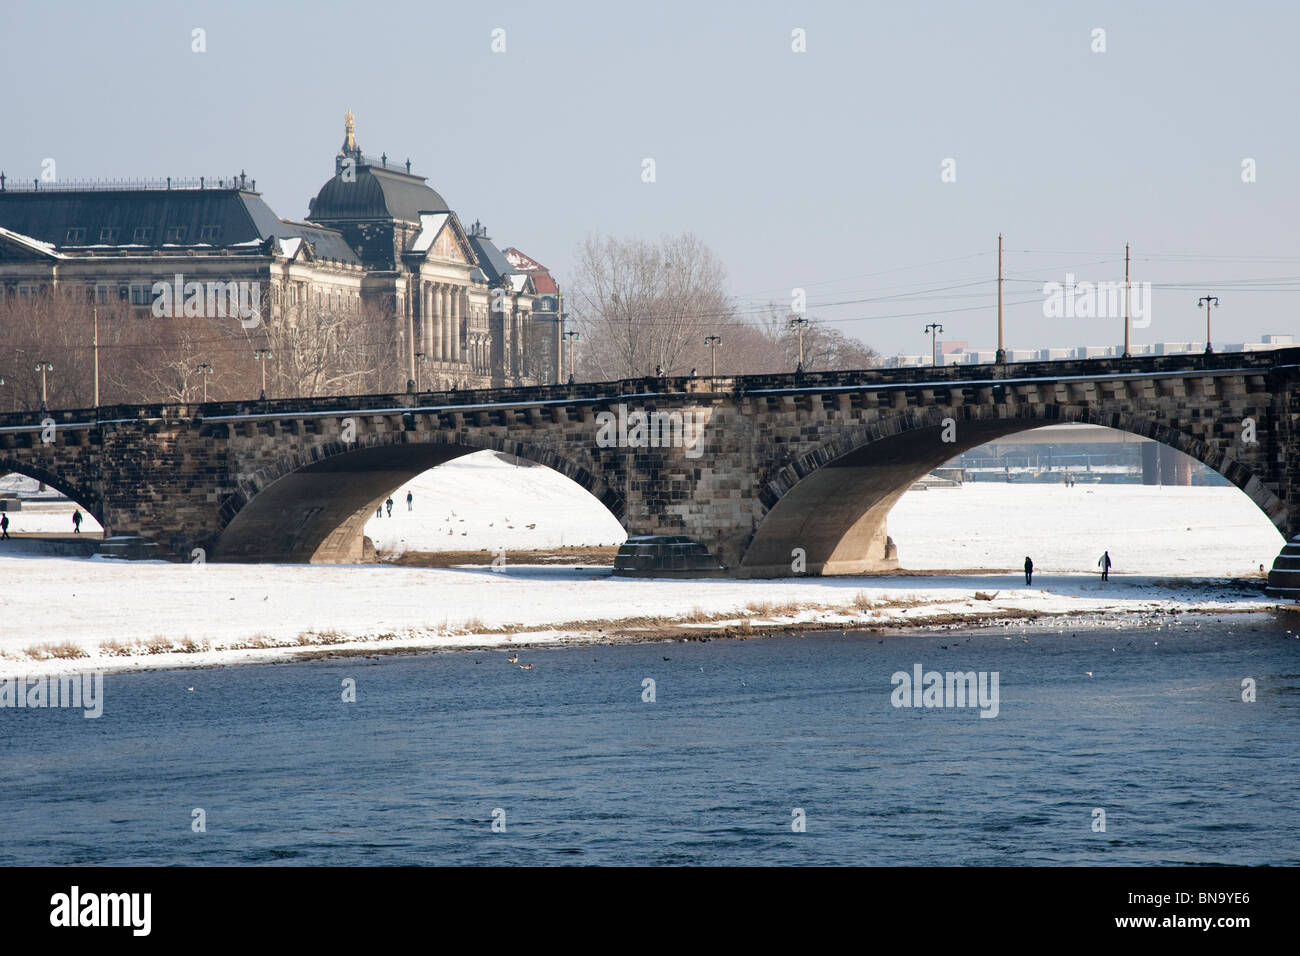 Augustusbrücke (Augustus Bridge) in Dresden, Germany. Stock Photo